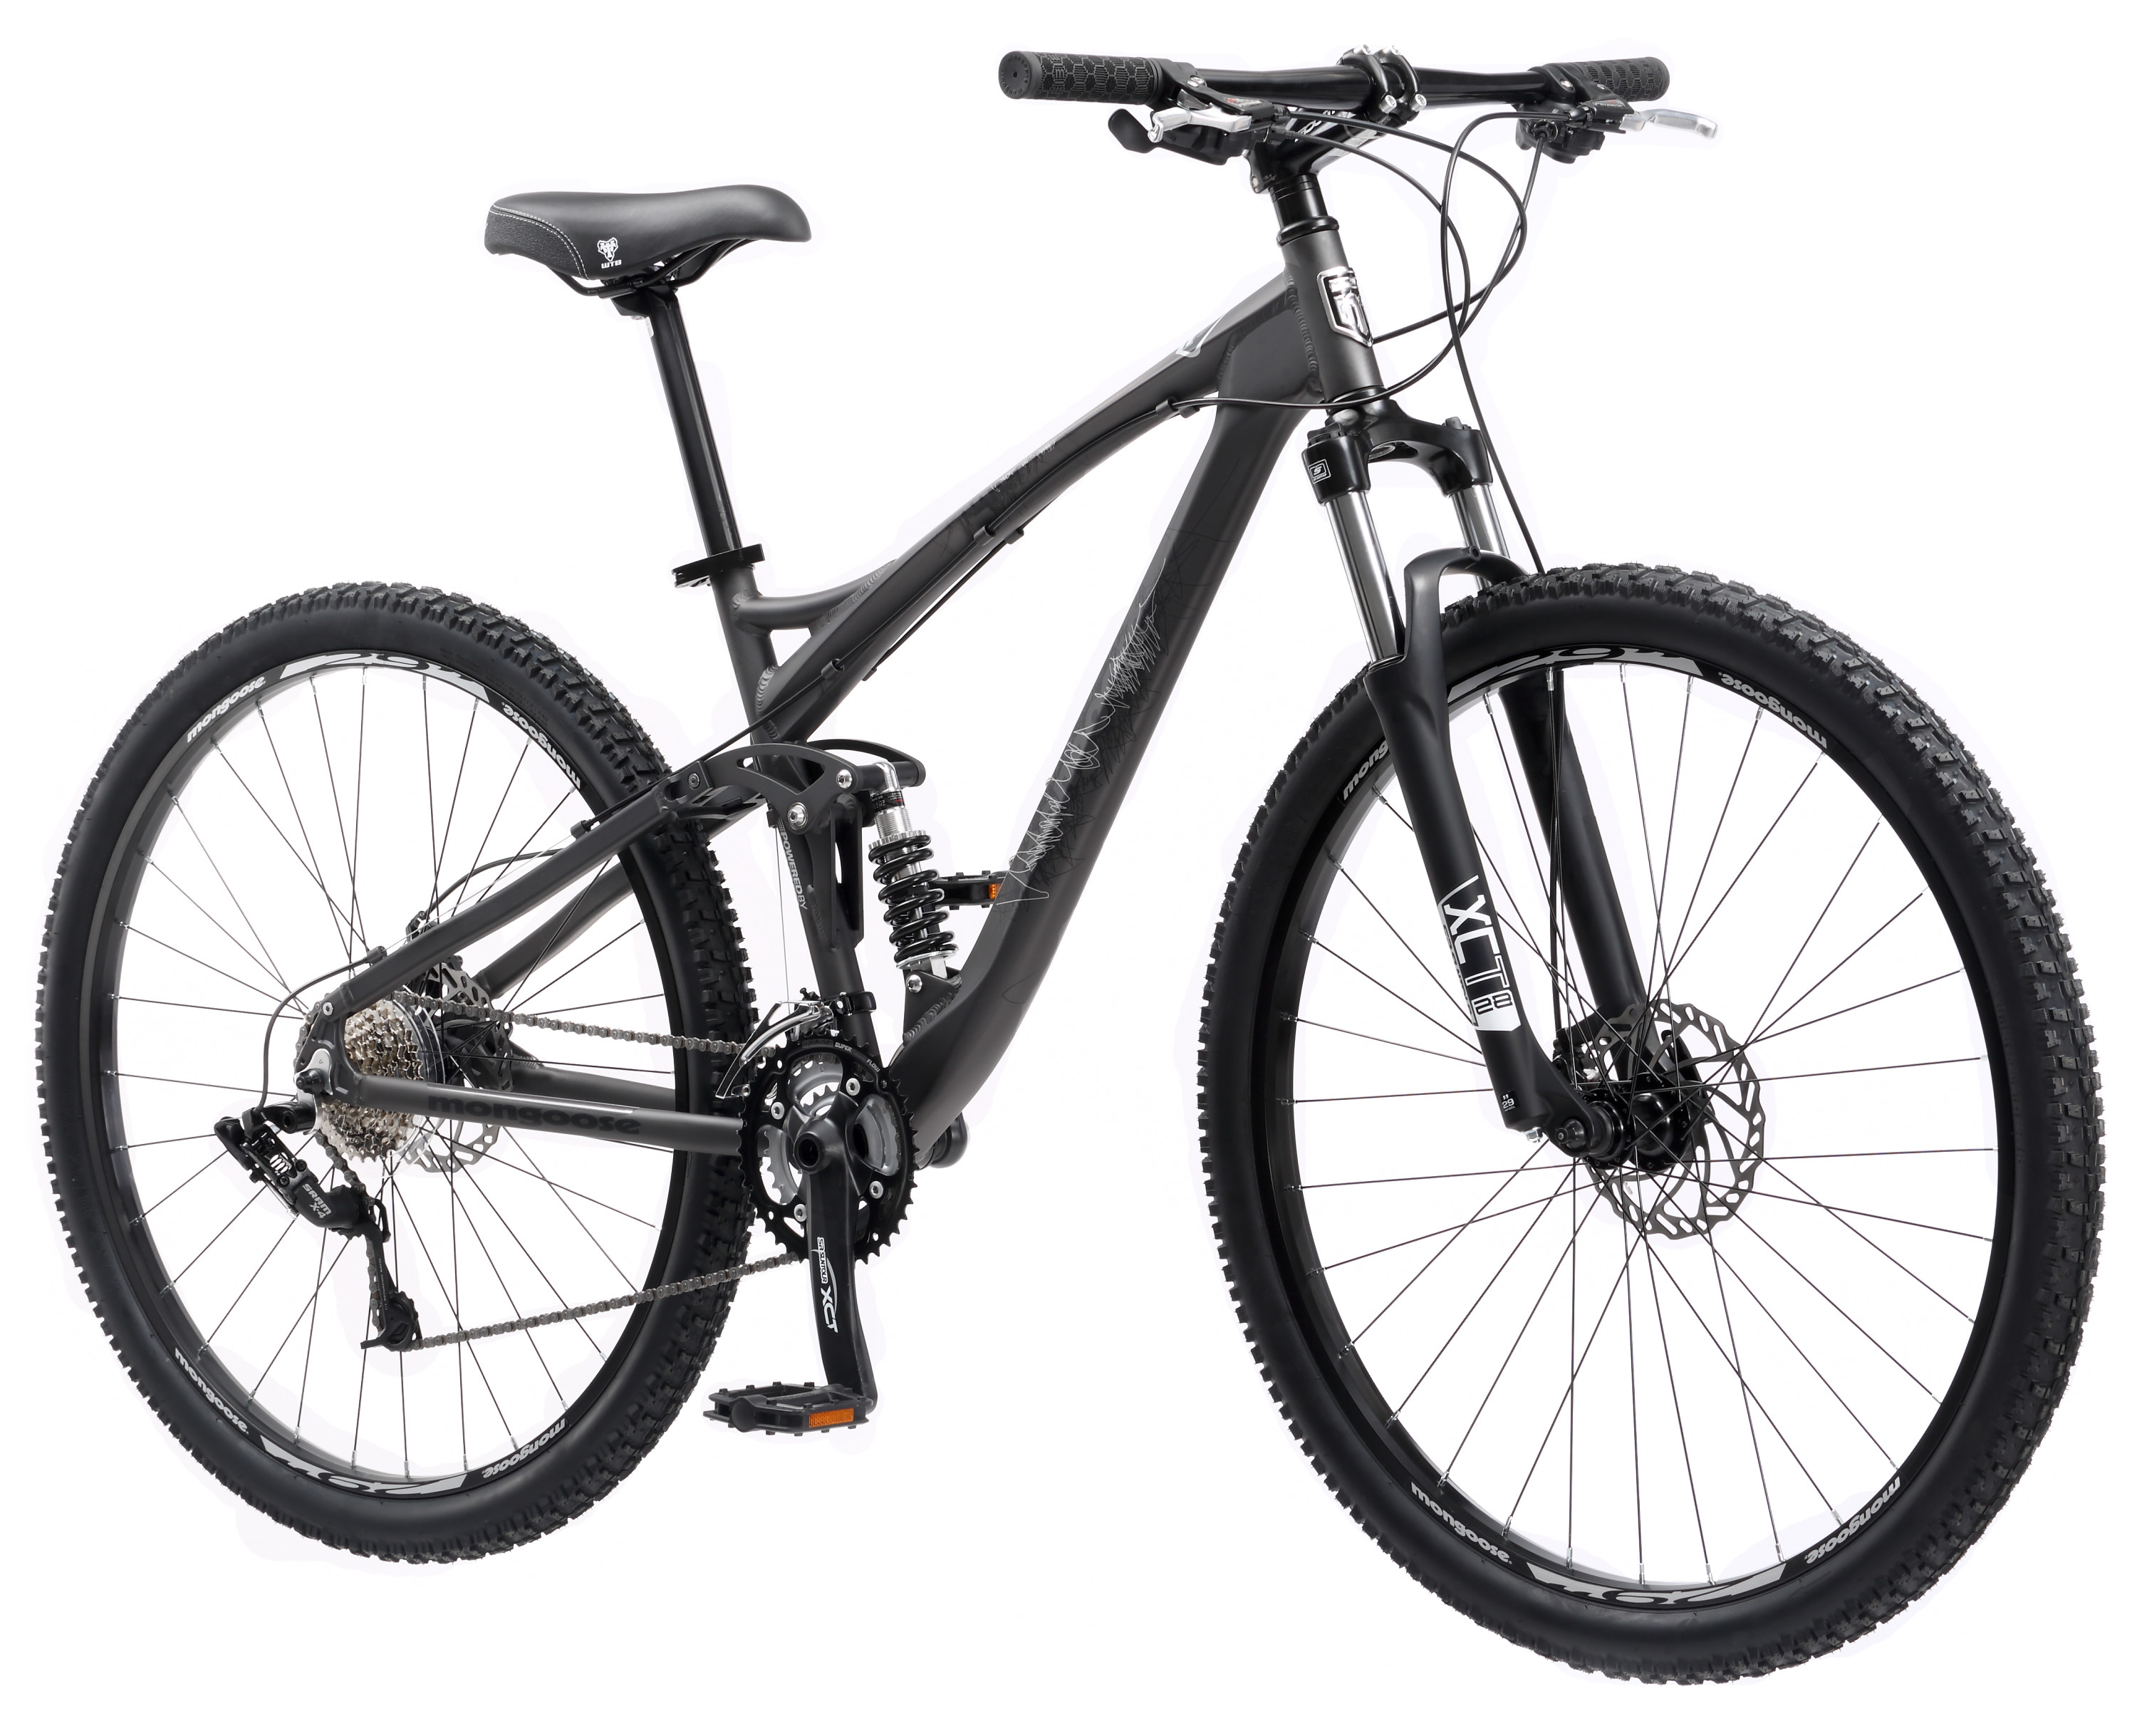 Mongoose XR-Pro Men's Mountain Bicycle, 29-inch Wheels, 24 Speeds, Black - image 1 of 8